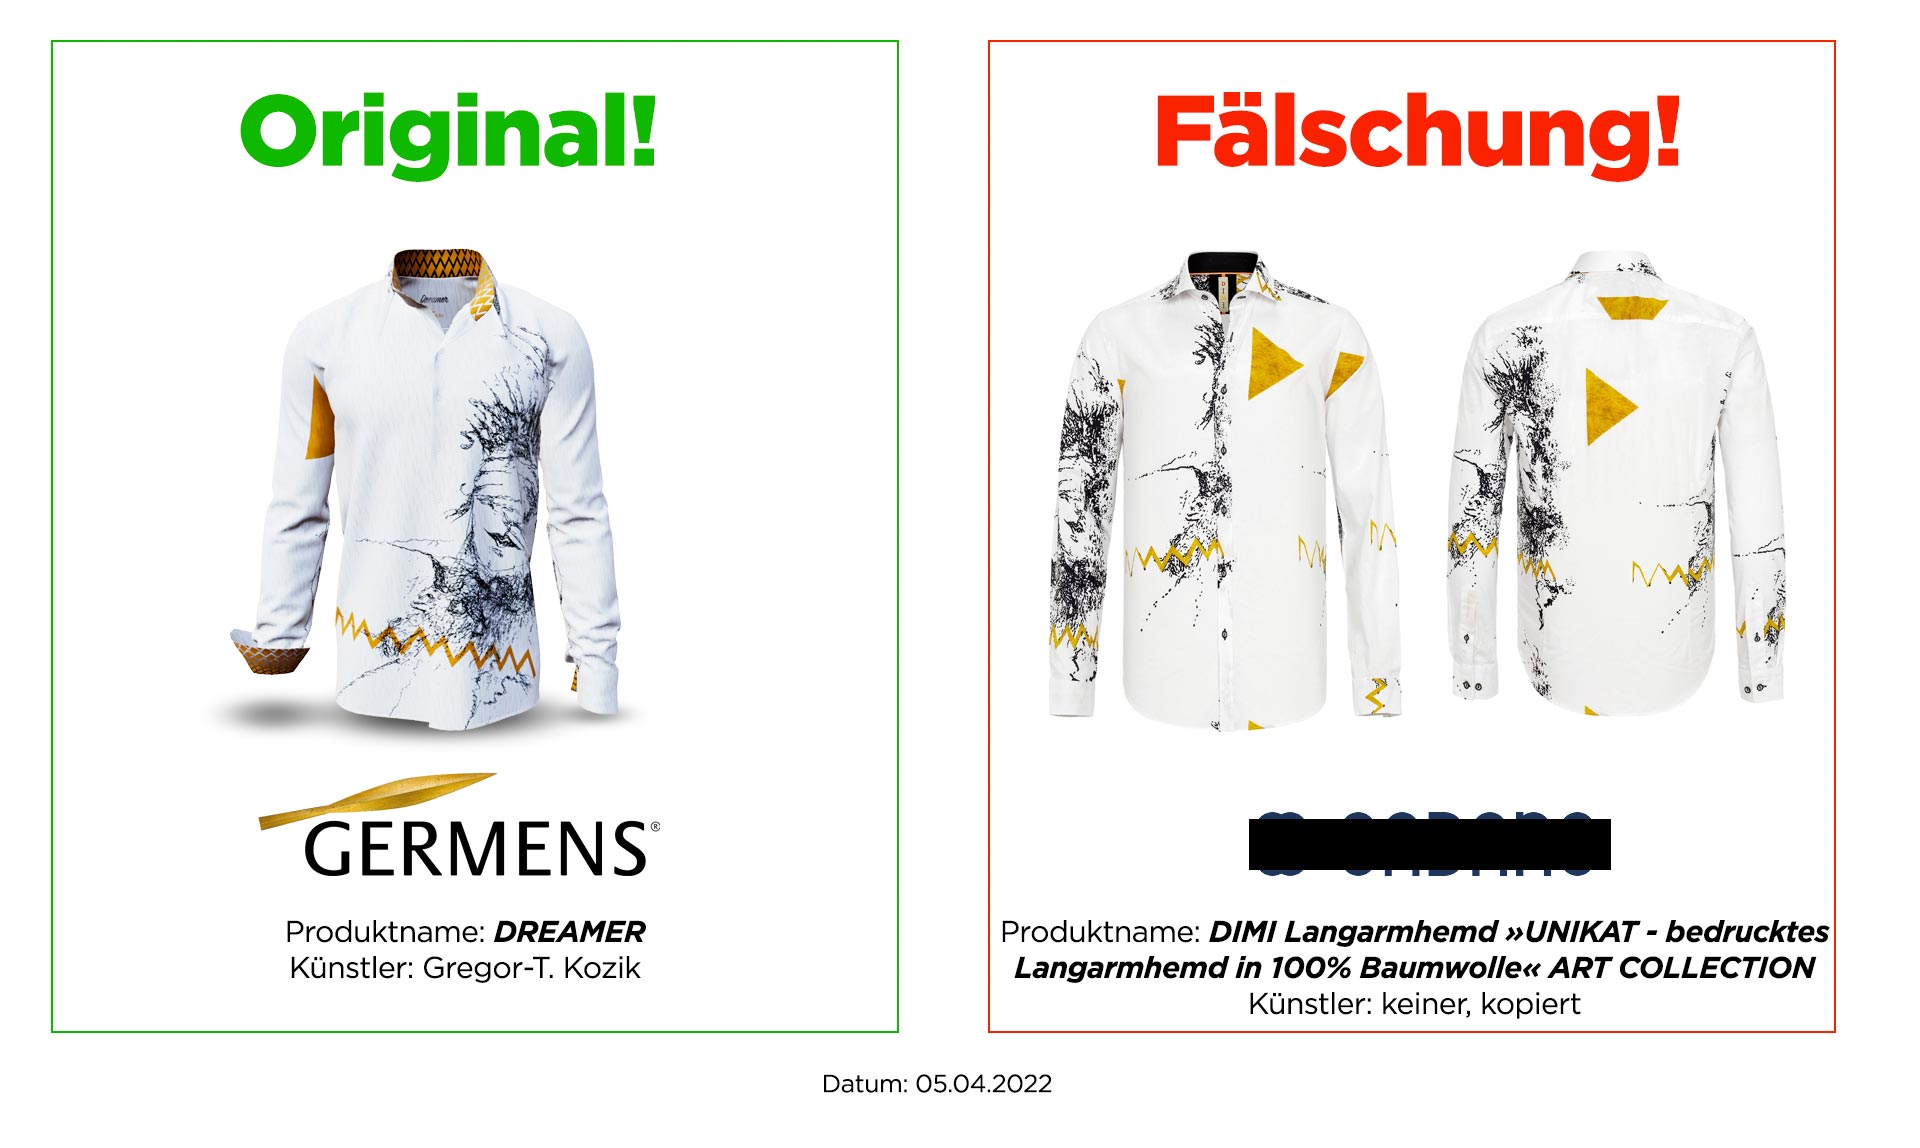 Original GERMENS® Hemd DREAMER und Plagiat